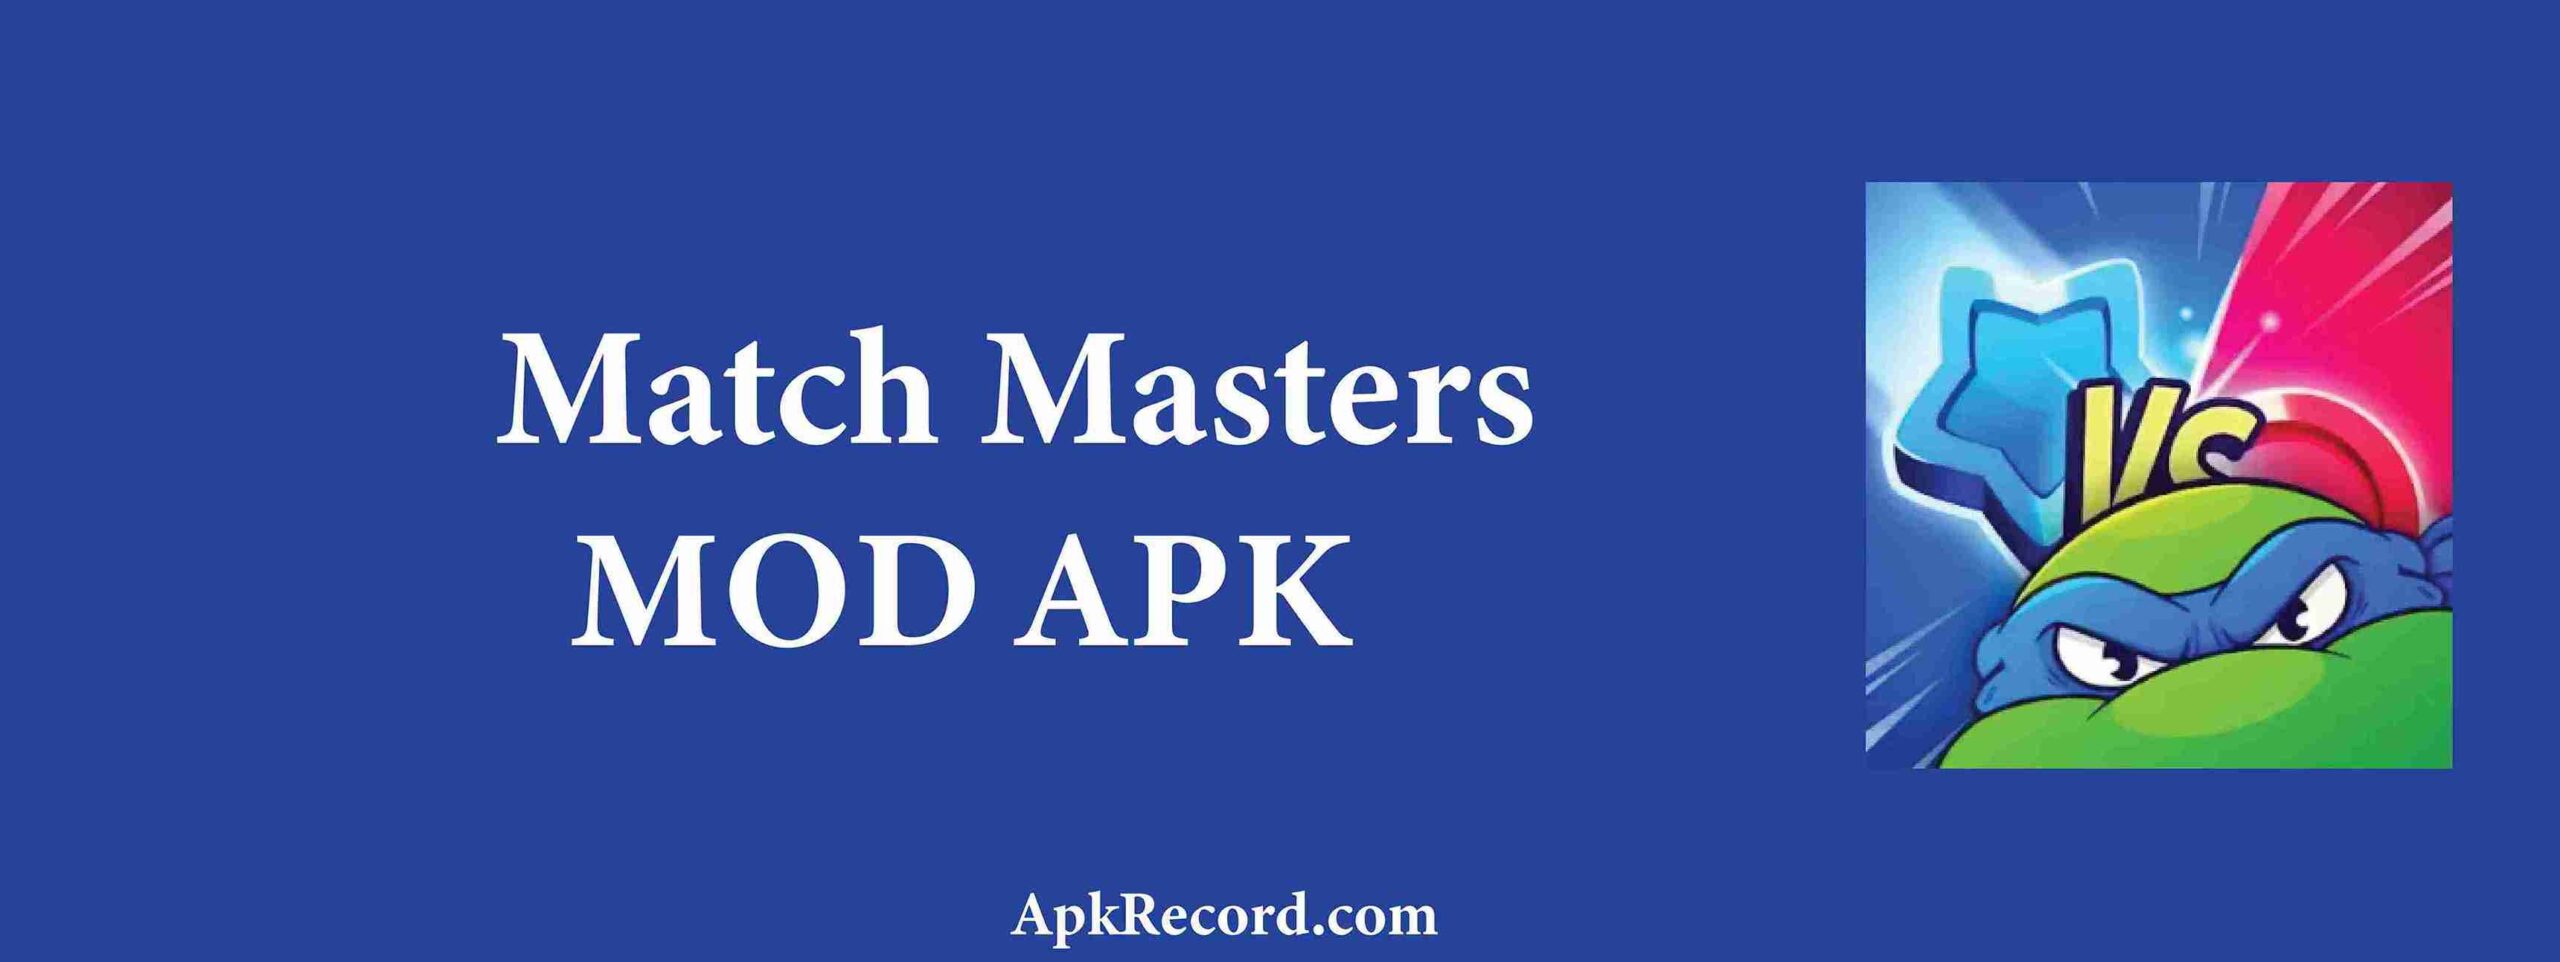 Match Masters MOD APK V4.704